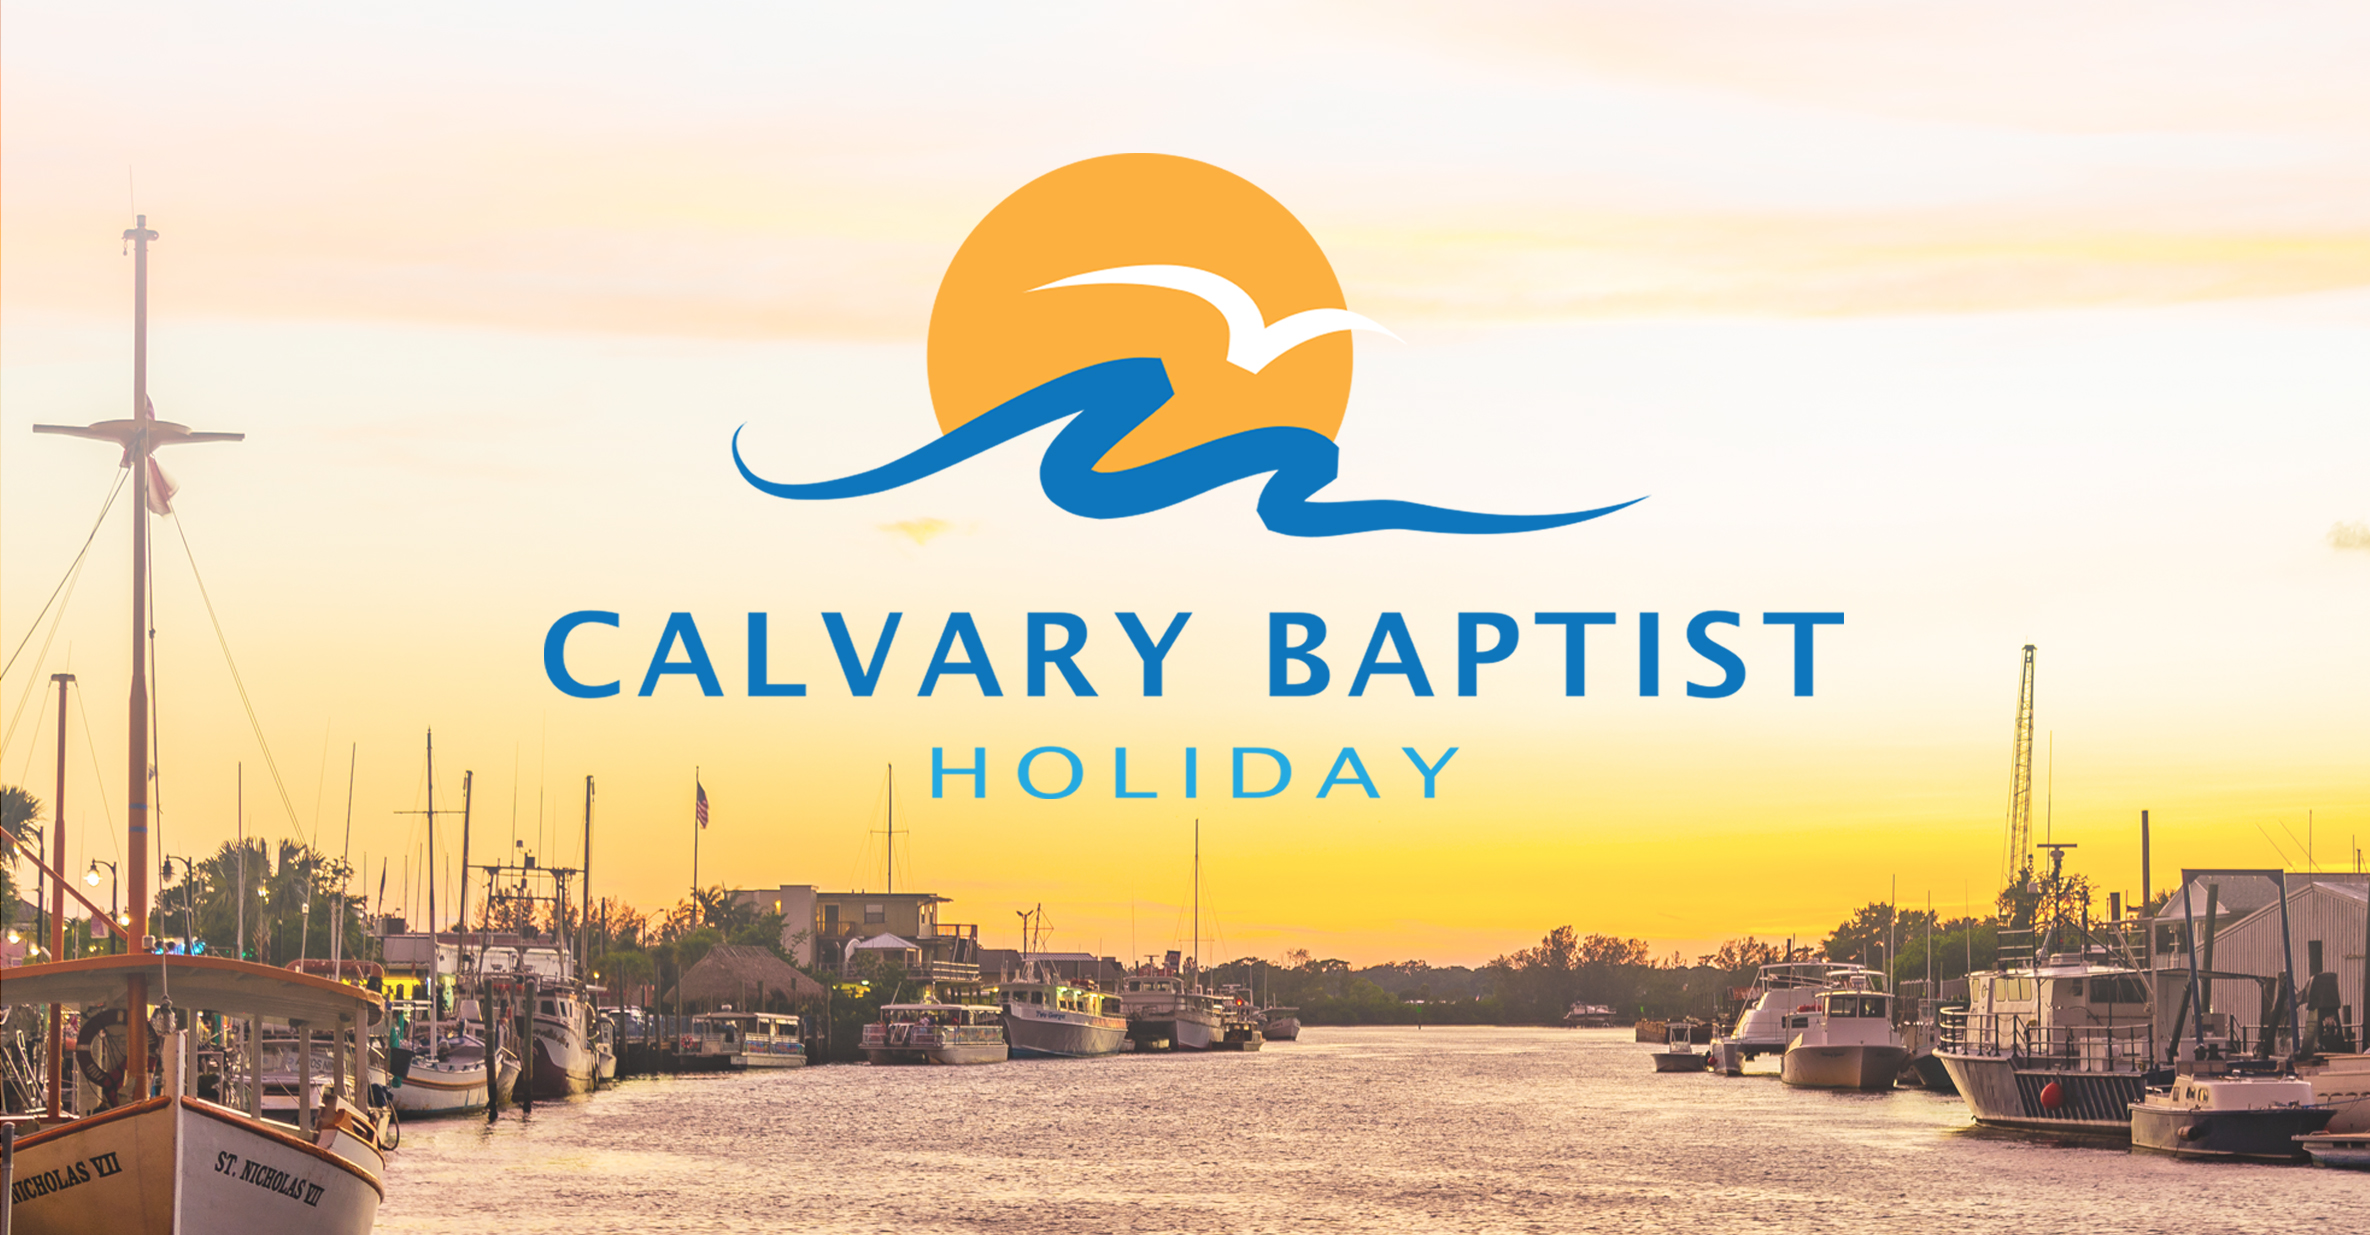 Calvary Baptist Church Holiday logo with Anclote River